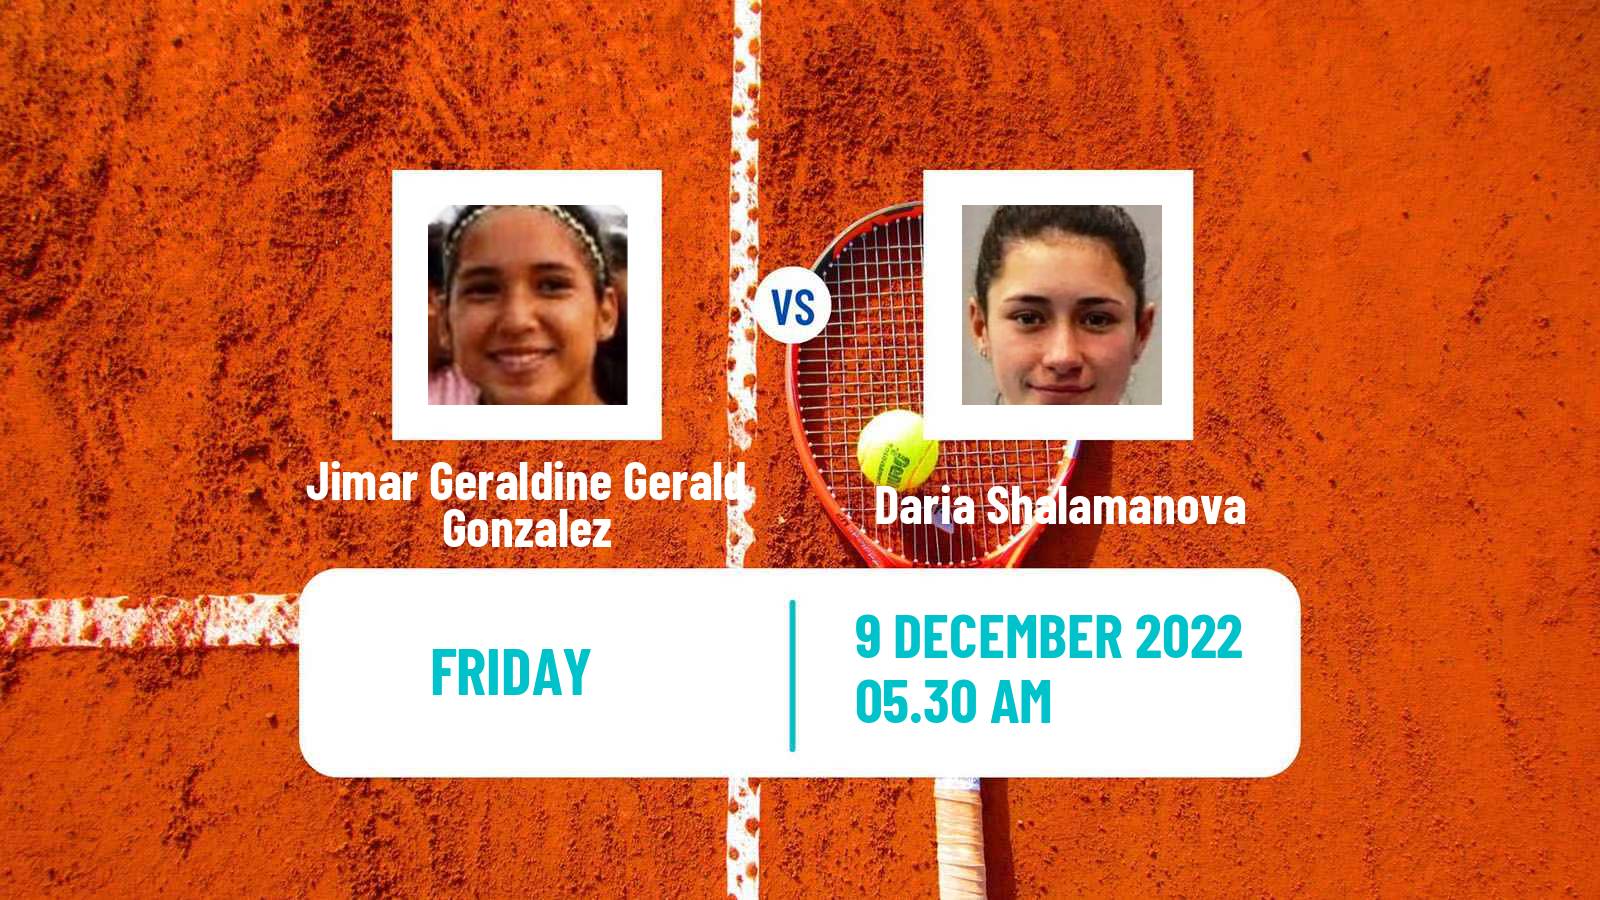 Tennis ITF Tournaments Jimar Geraldine Gerald Gonzalez - Daria Shalamanova